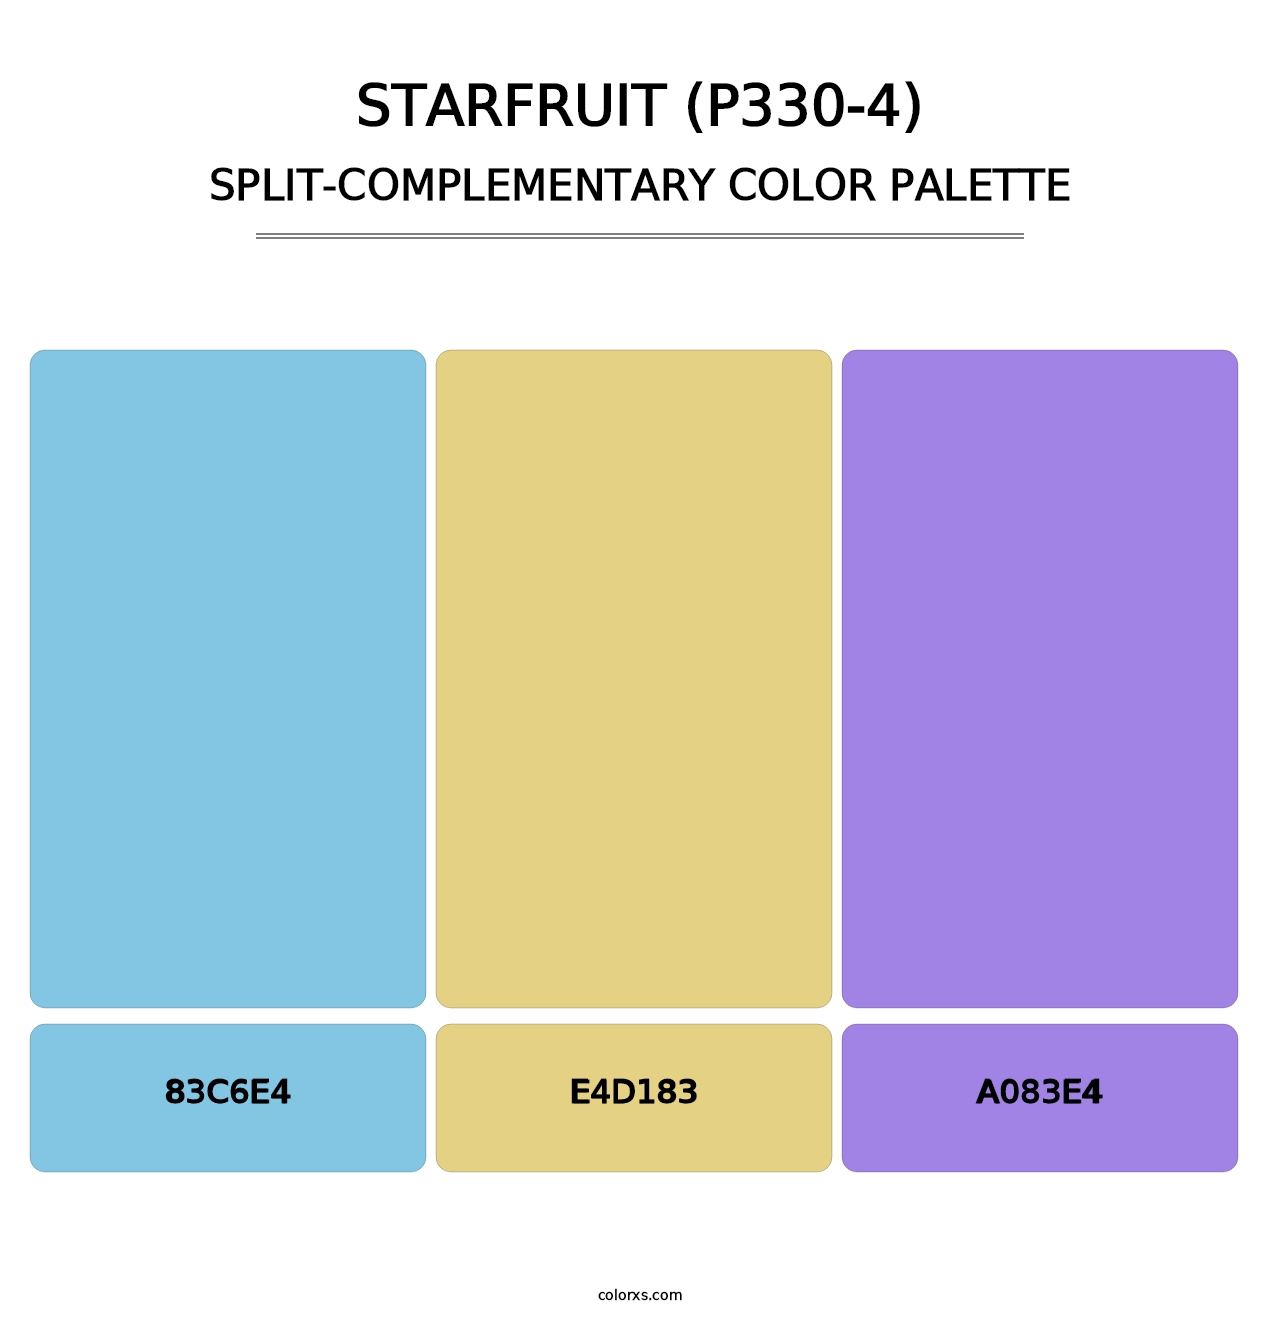 Starfruit (P330-4) - Split-Complementary Color Palette